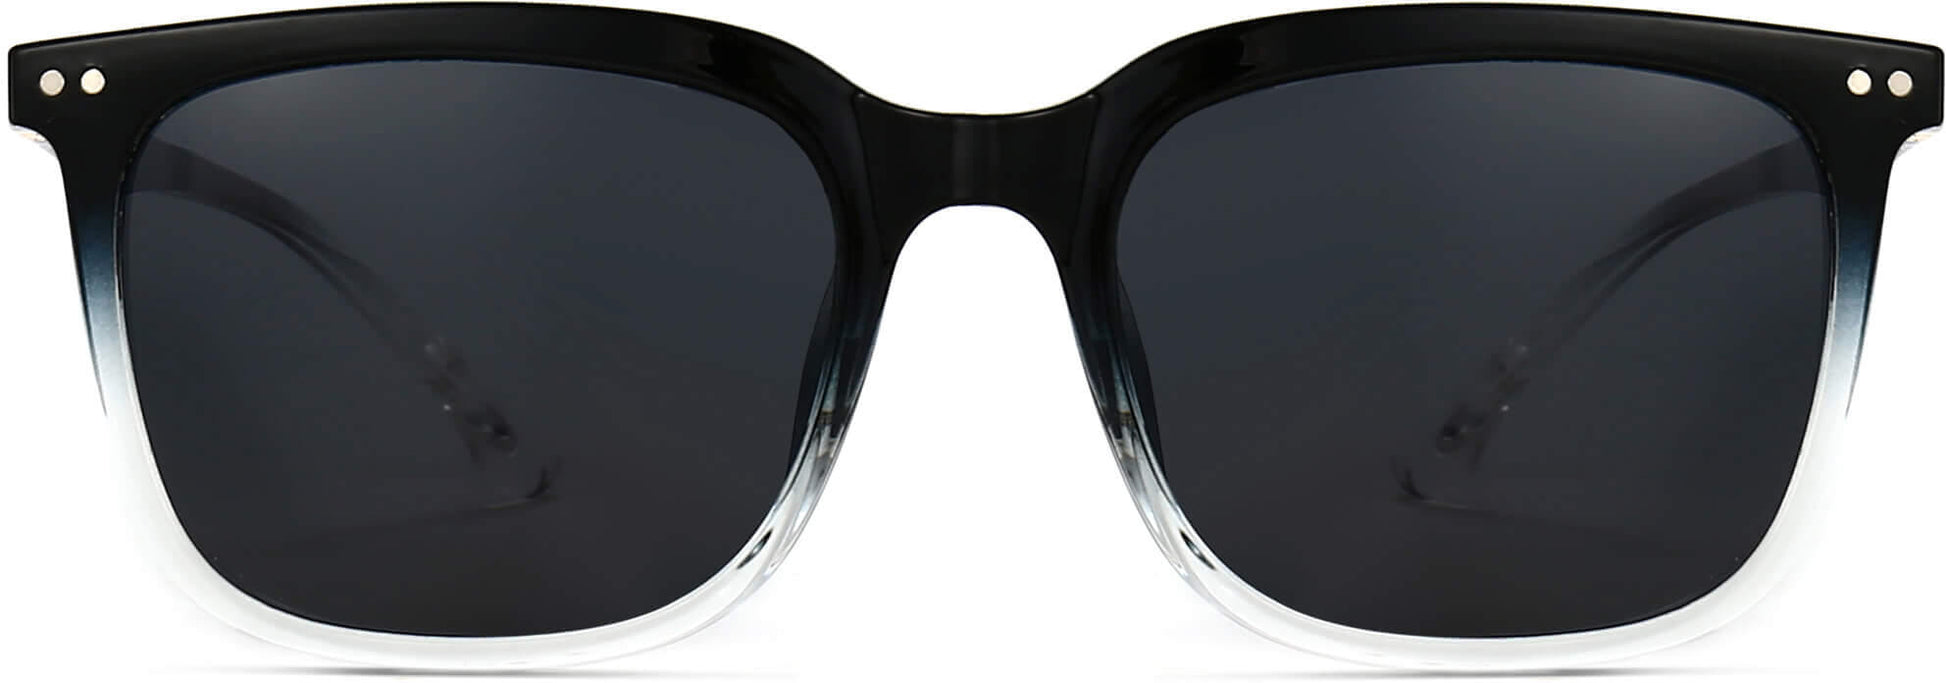 Sofia Black Plastic Sunglasses from ANRRI, front view